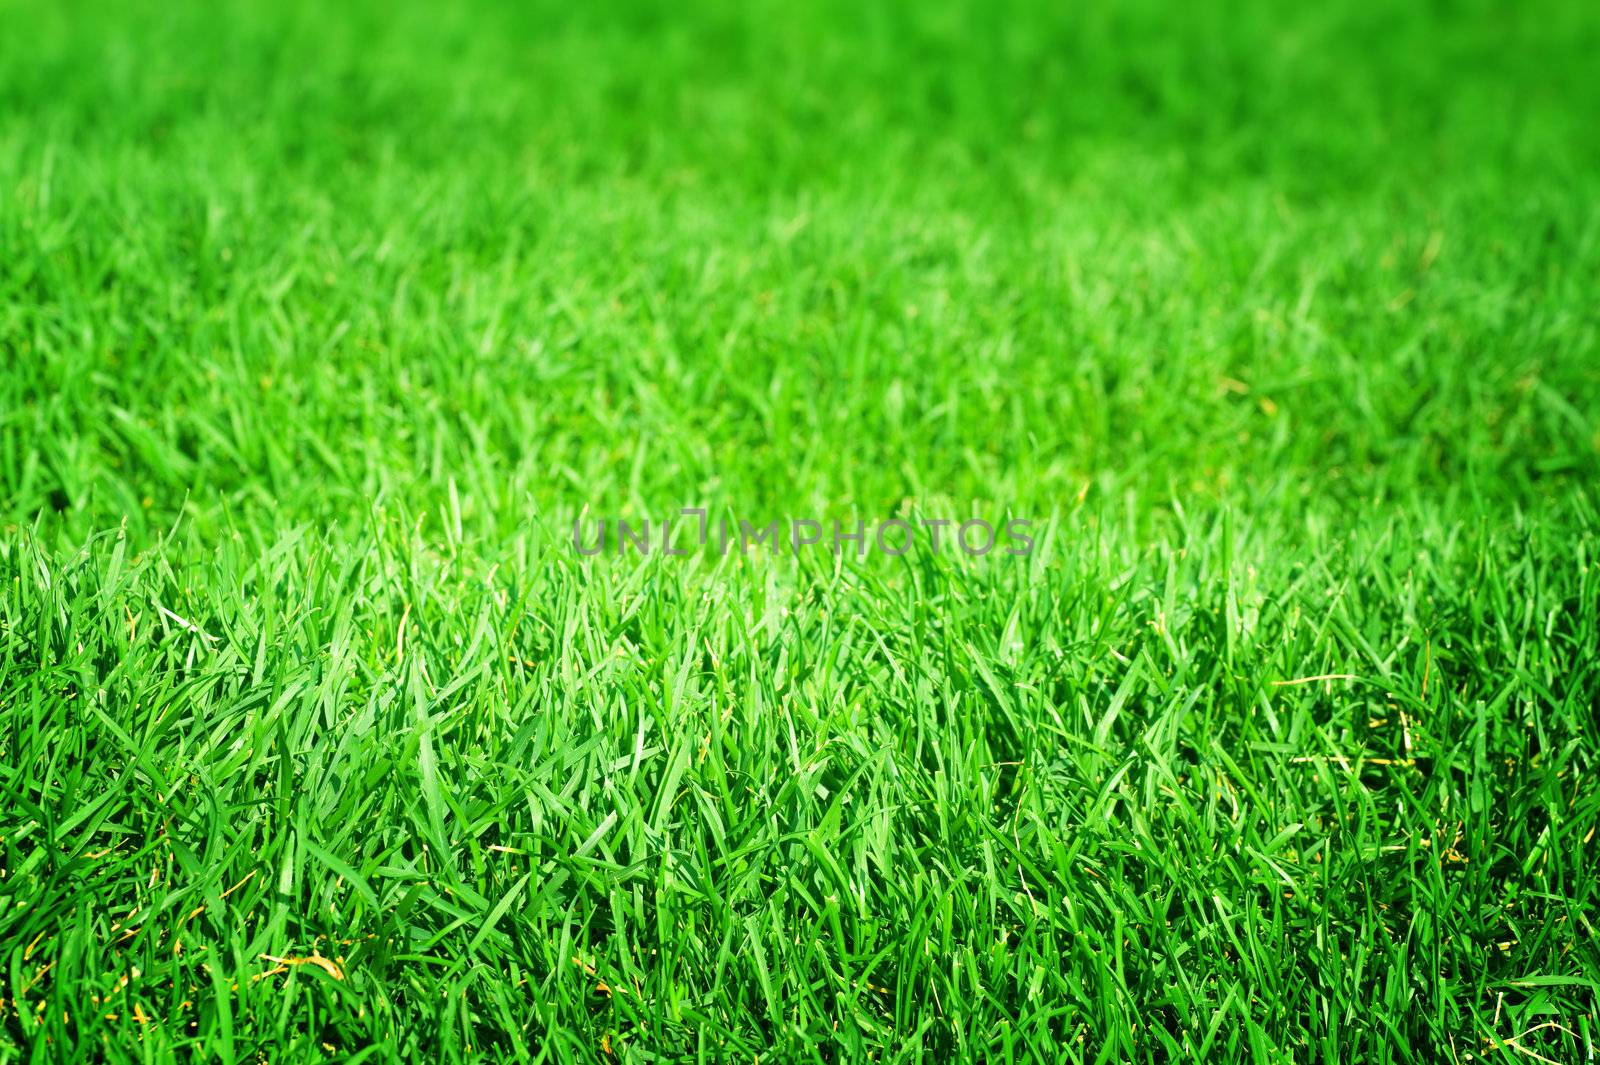 Green Grass Texture  by SubbotinaA